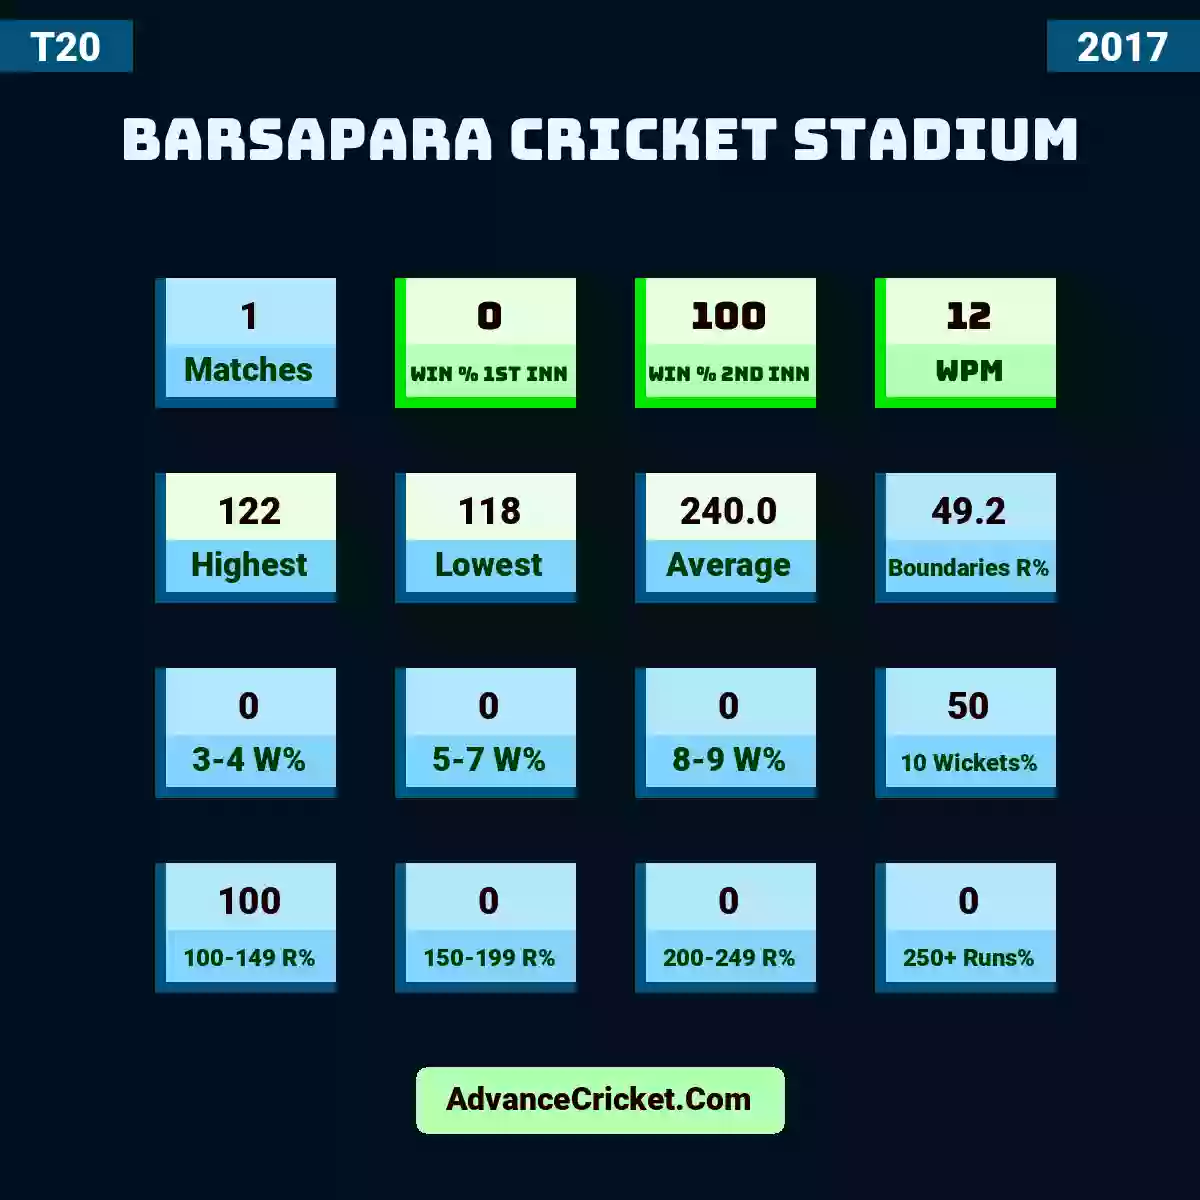 Image showing Barsapara Cricket Stadium with Matches: 1, Win % 1st Inn: 0, Win % 2nd Inn: 100, WPM: 12, Highest: 122, Lowest: 118, Average: 240.0, Boundaries R%: 49.2, 3-4 W%: 0, 5-7 W%: 0, 8-9 W%: 0, 10 Wickets%: 50, 100-149 R%: 100, 150-199 R%: 0, 200-249 R%: 0, 250+ Runs%: 0.